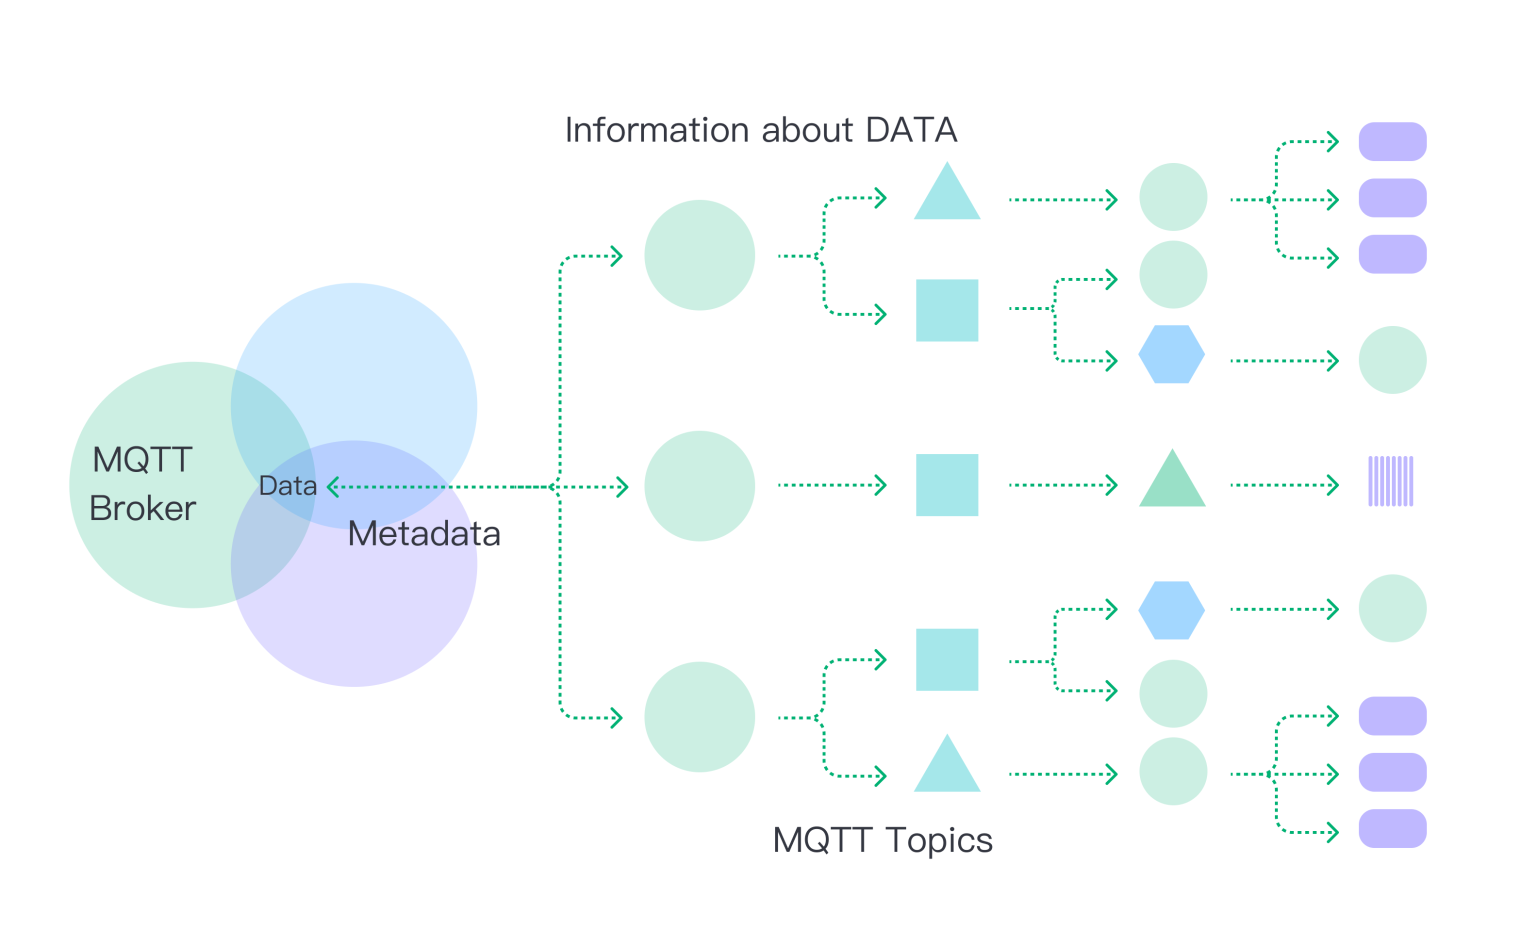 MQTT topics and metadata